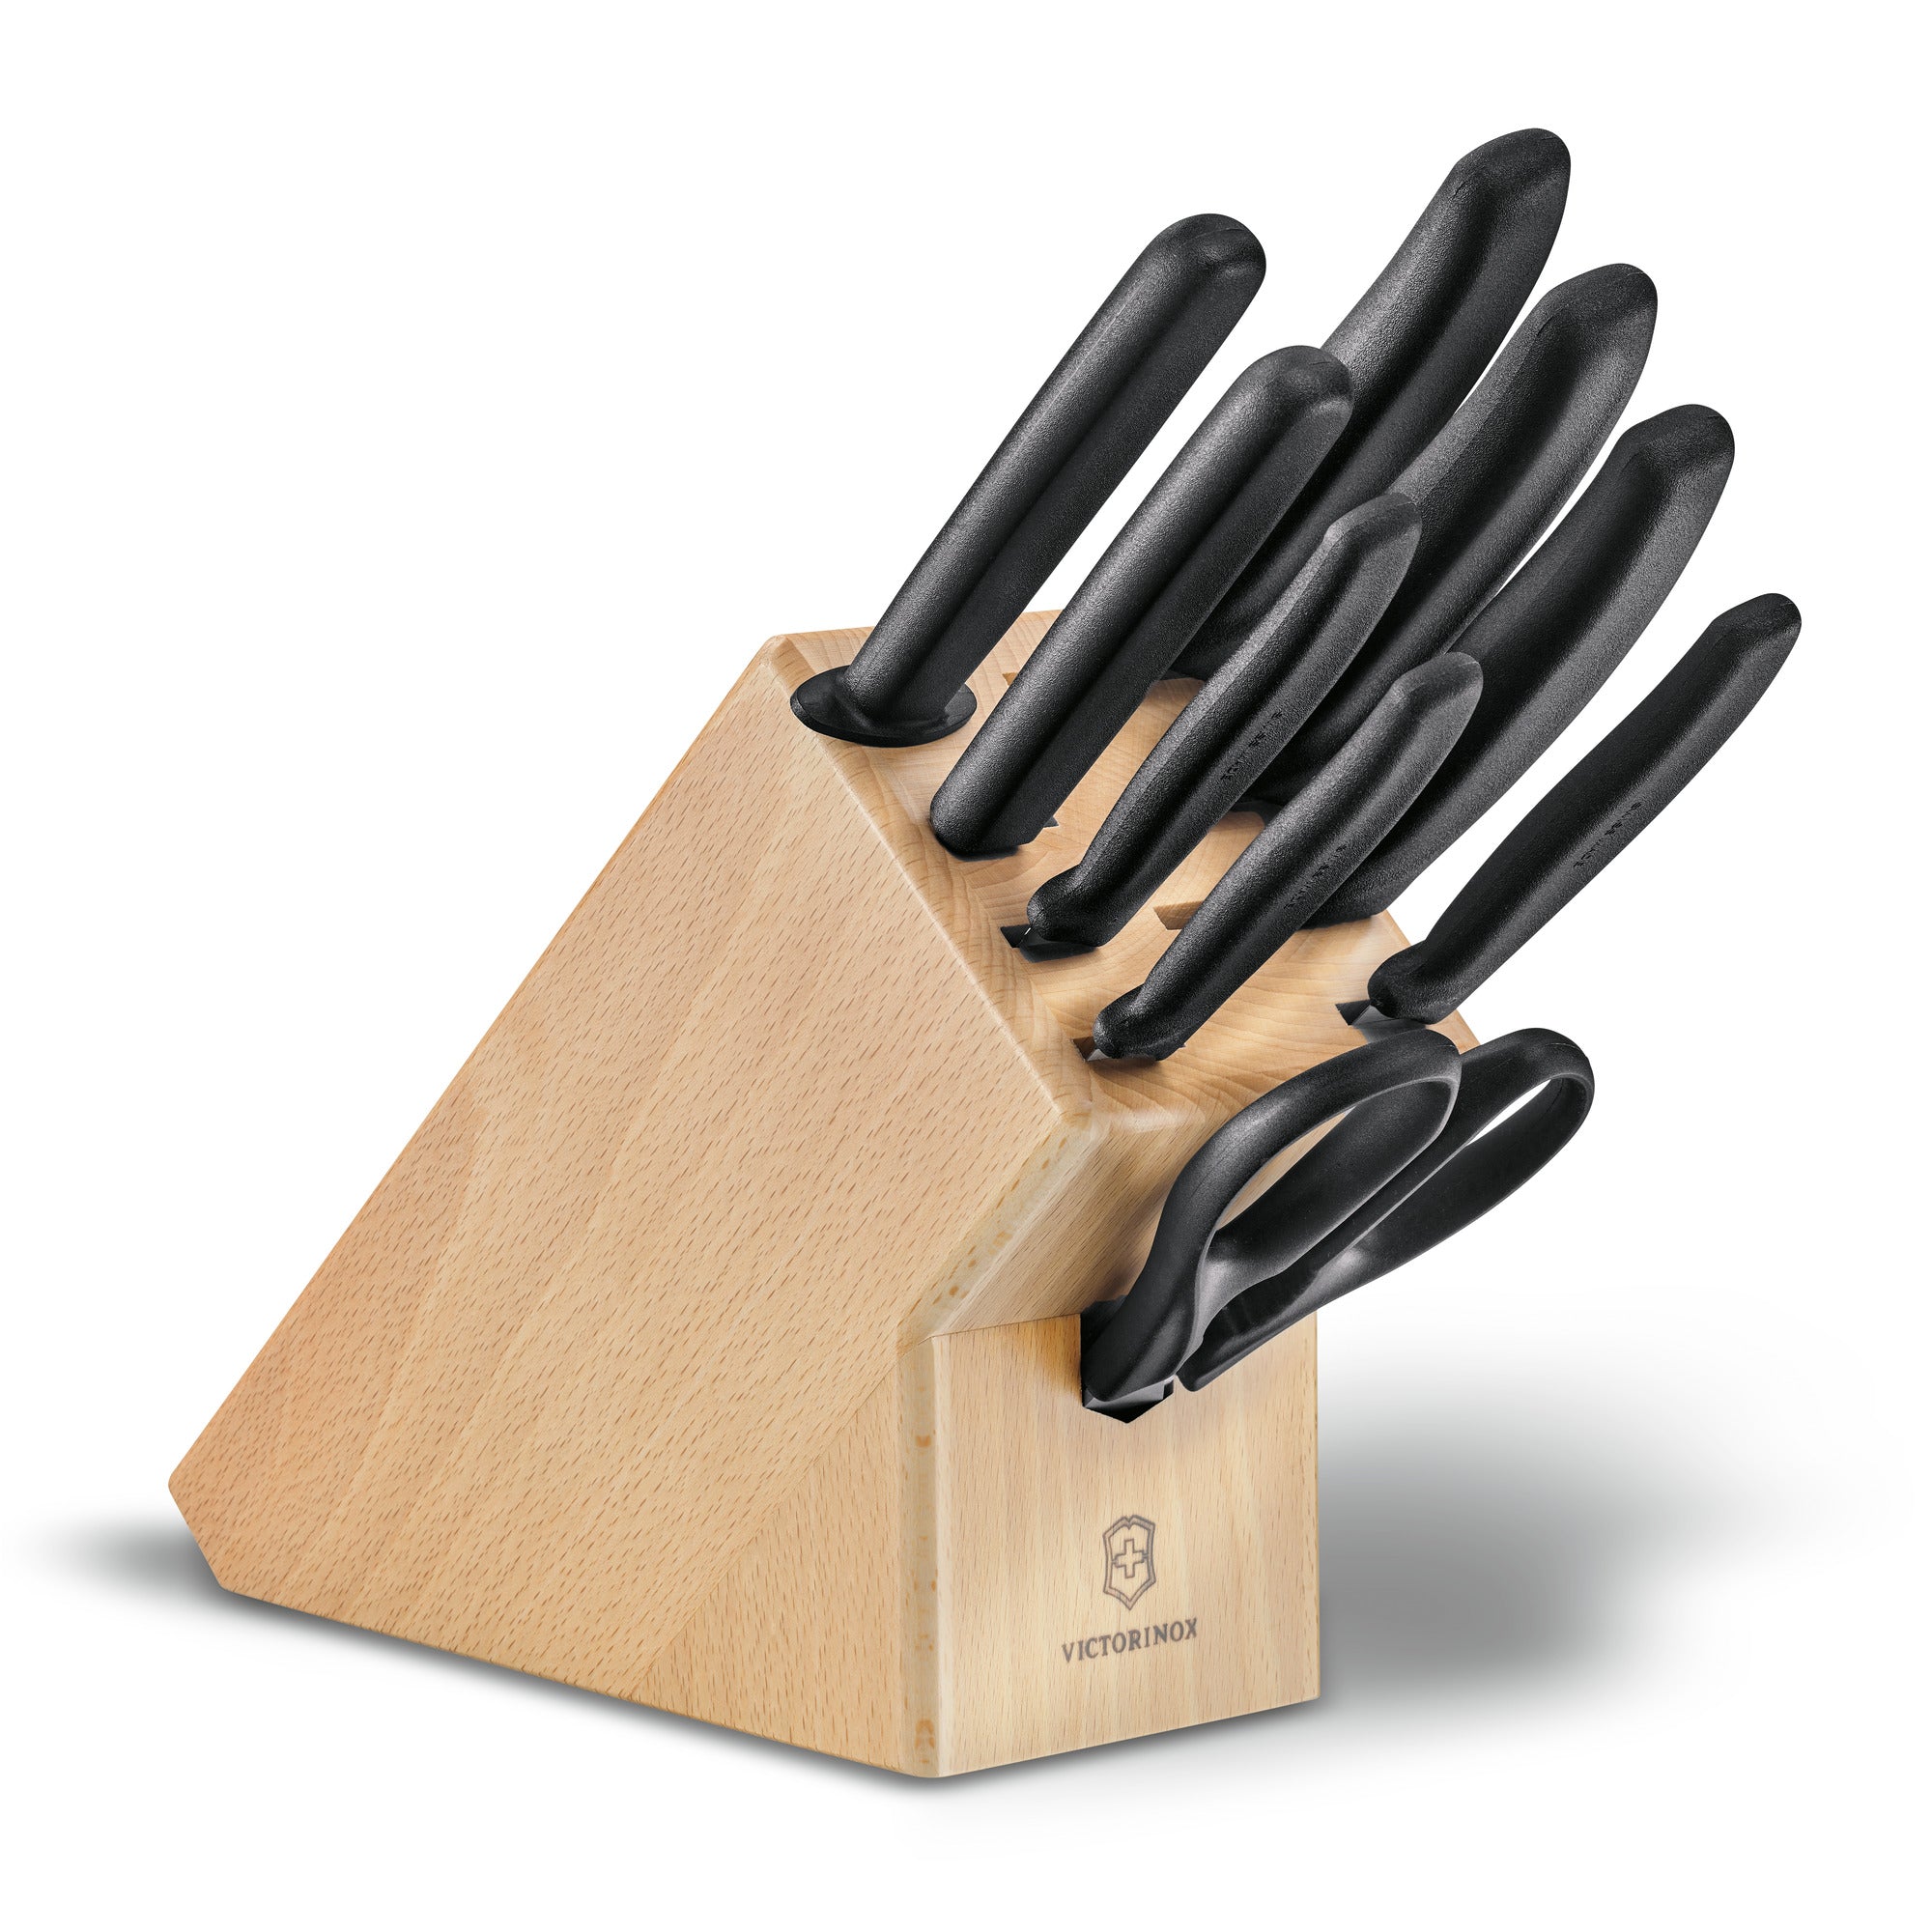 Cuchillo de Cocina Victorinox Swiss Classic Legumbres 10 cm